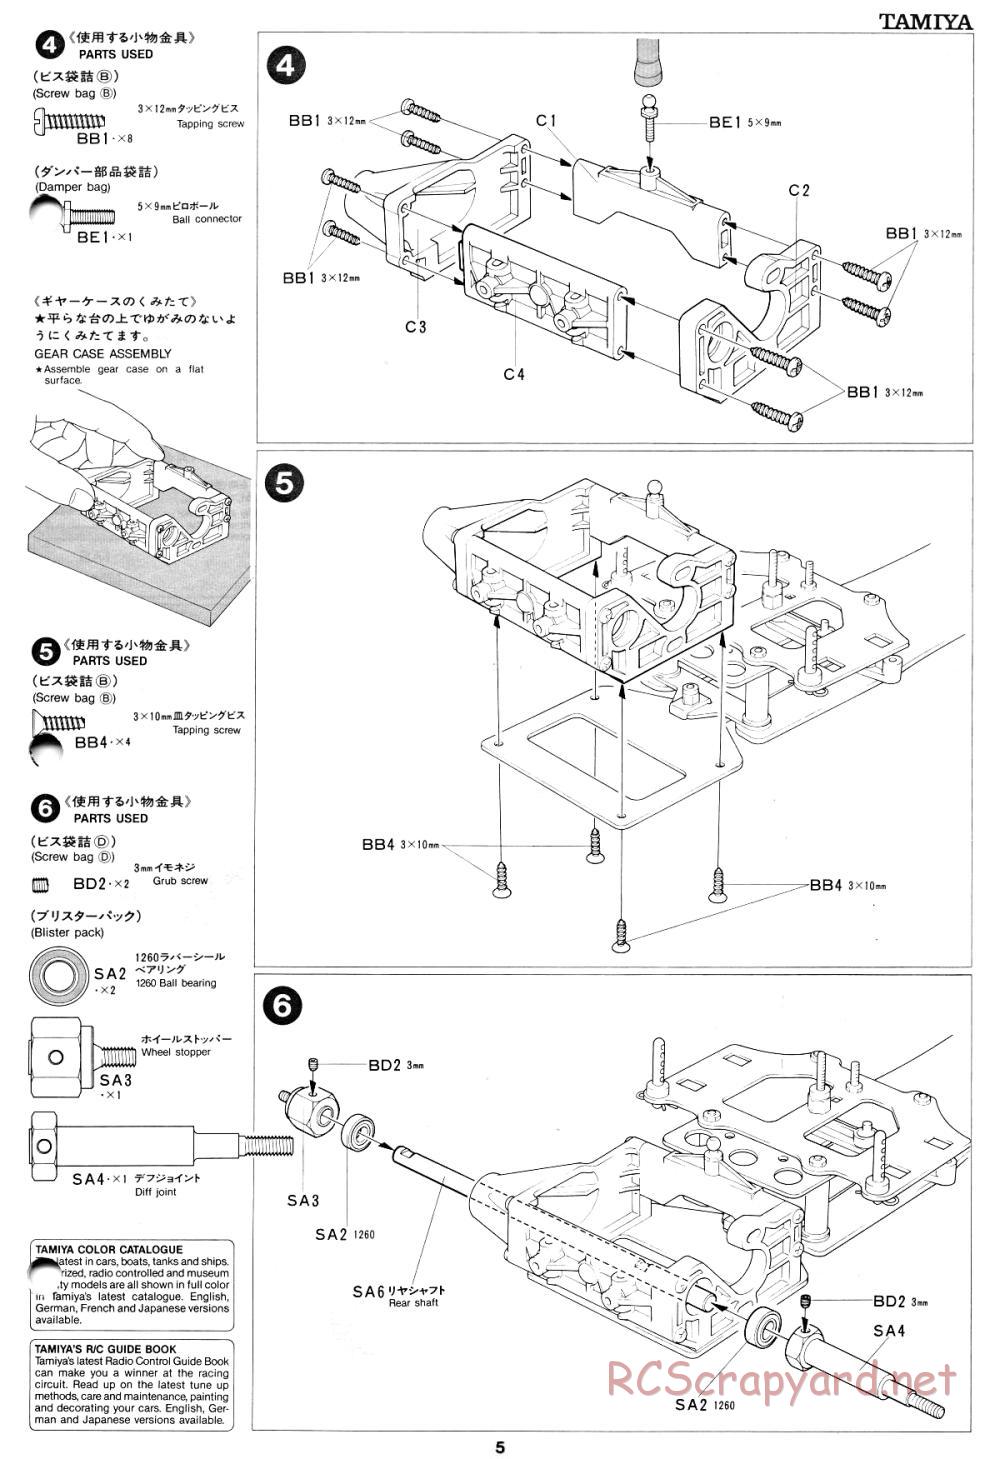 Tamiya - Tyrrell 019 Ford - 58090 - Manual - Page 5